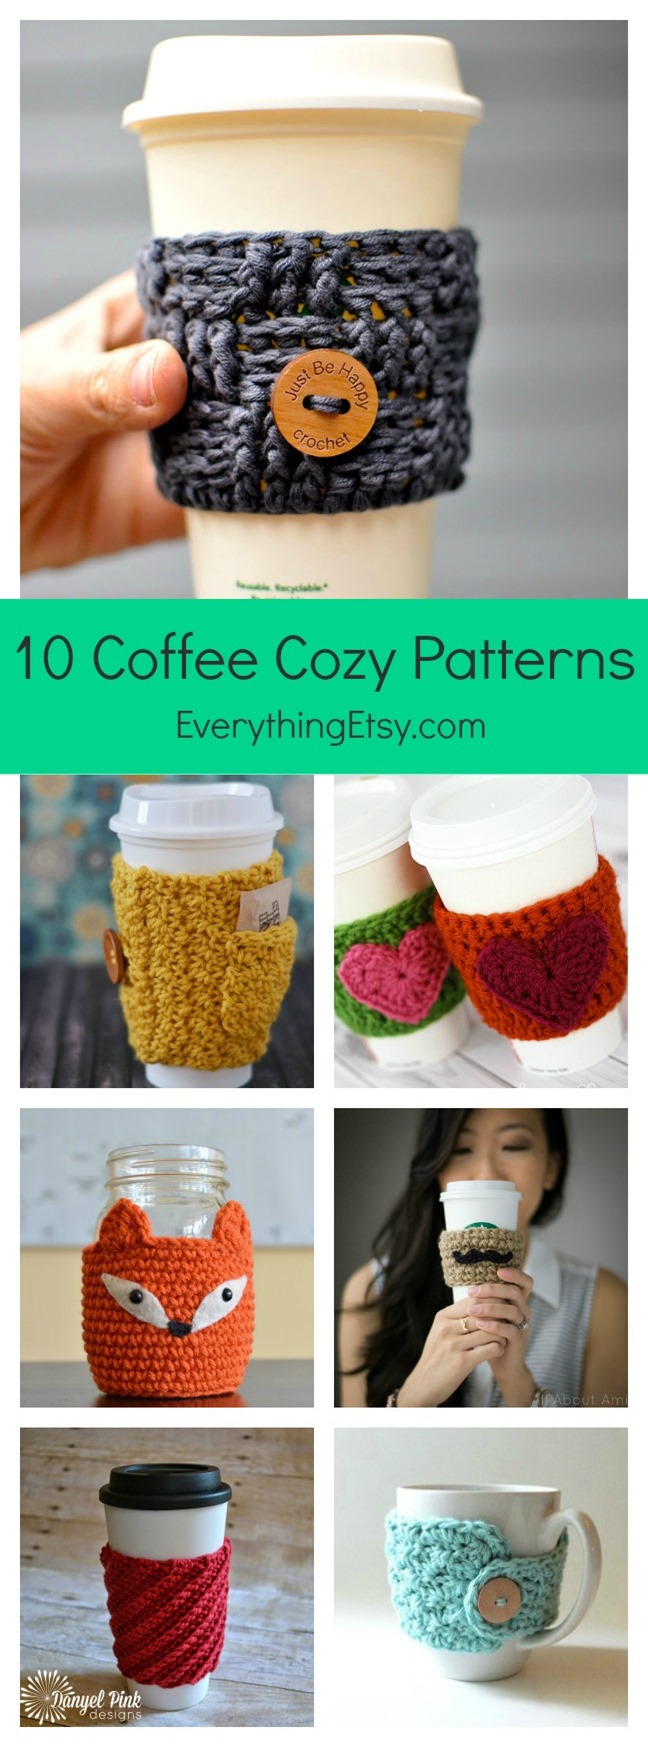 10 Free Coffee Cozy Crochet Patterns on EverythingEtsy.com